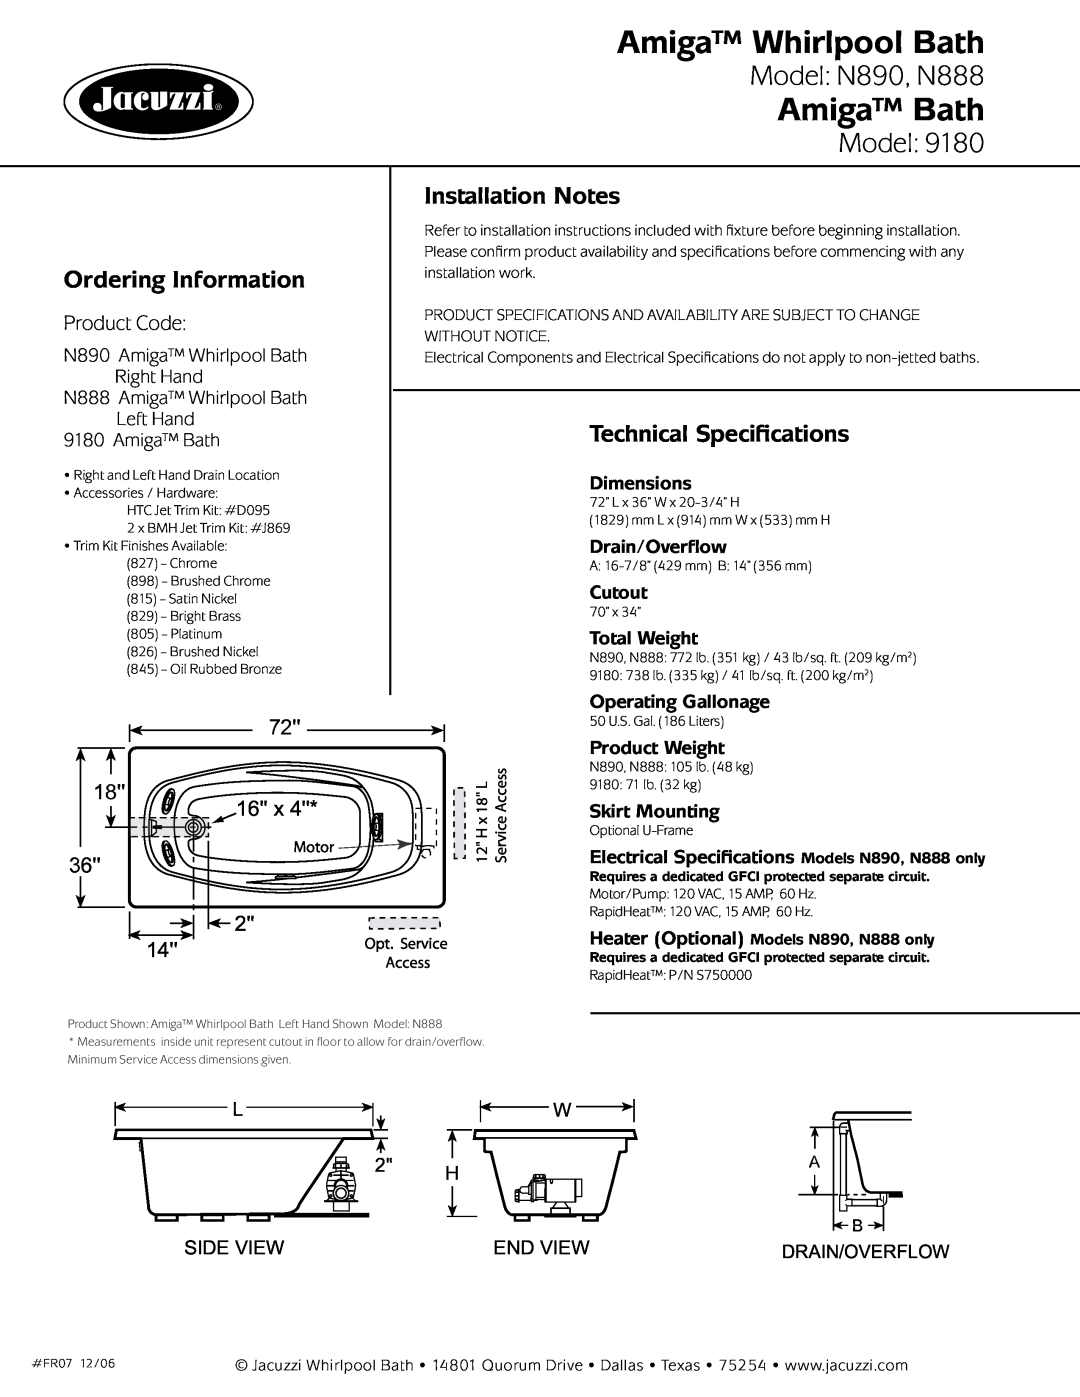 Jacuzzi 9180 Amiga Whirlpool Bath, Amiga Bath, Model N890, N888, Ordering Information, Installation Notes, Product Code 